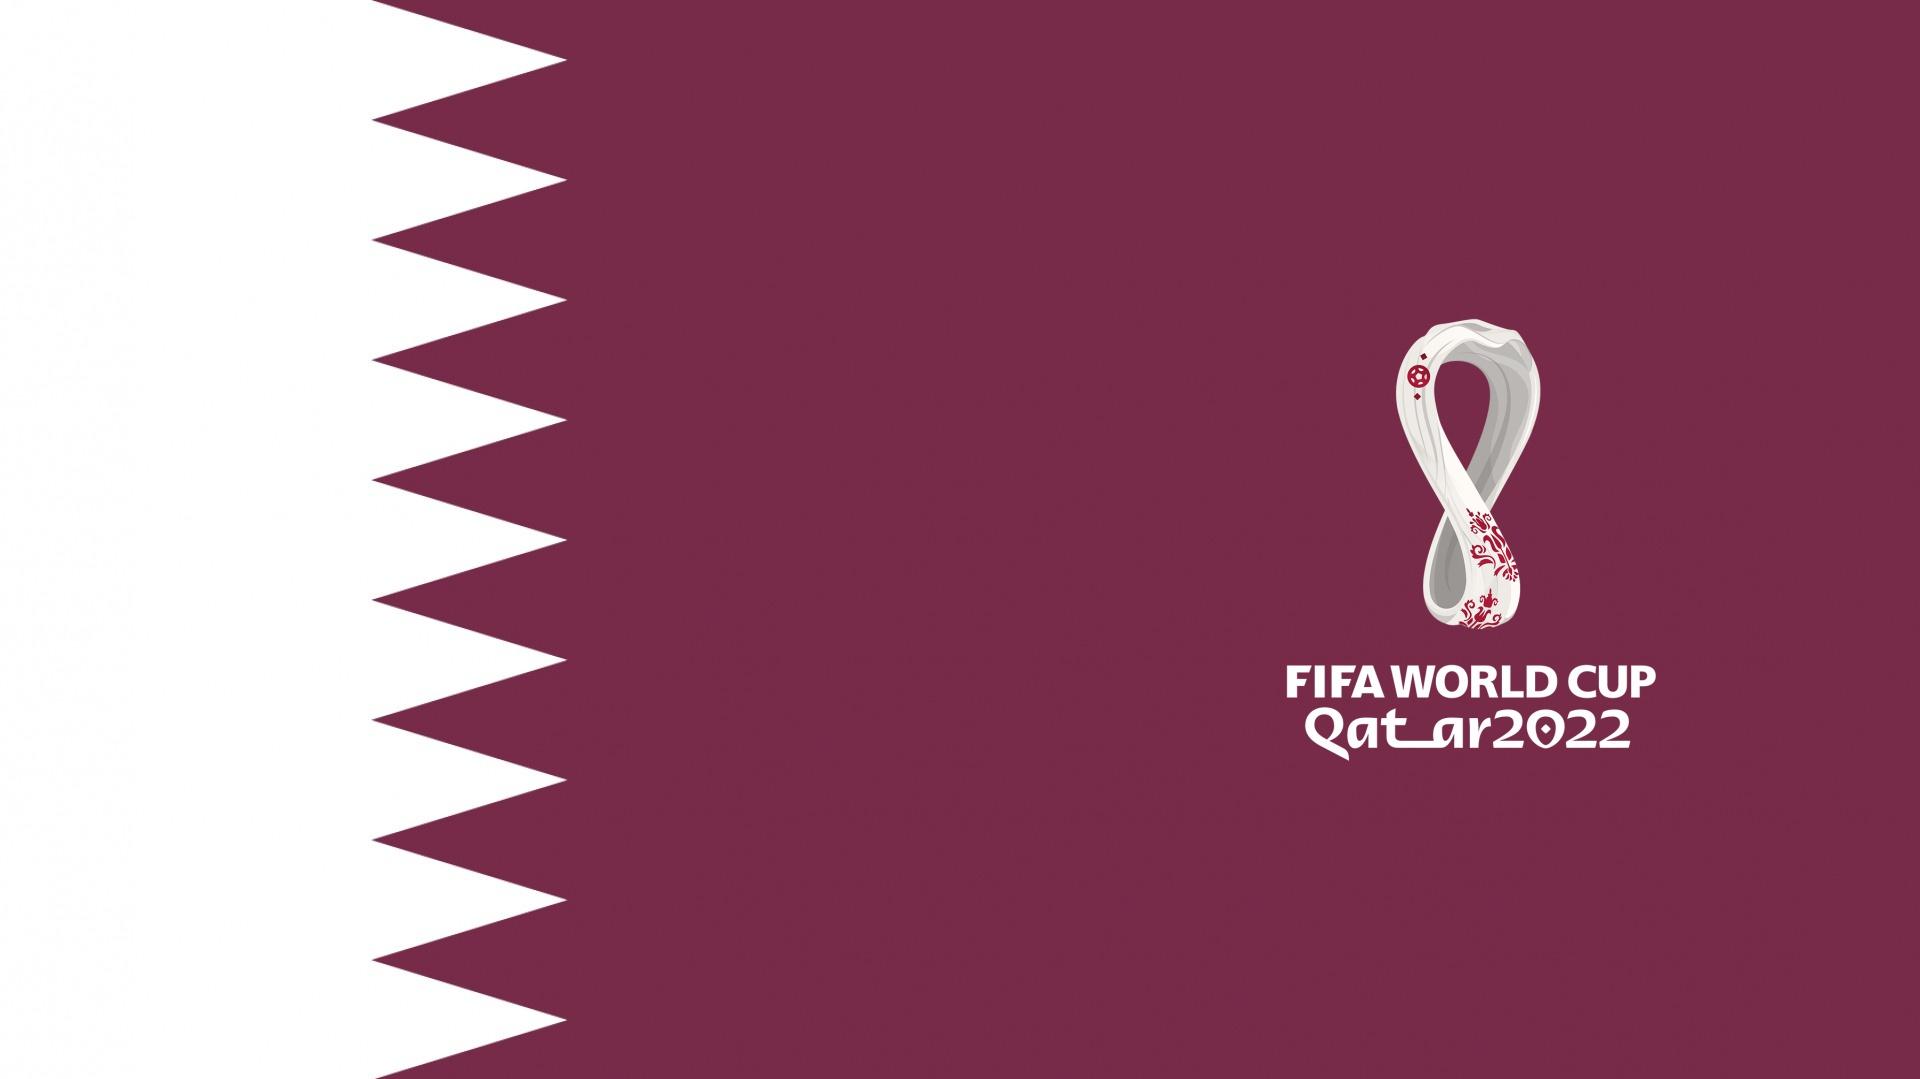 FIFA World Cup Qatar 2022 Wallpaper Qatar Flag by nc3studios08